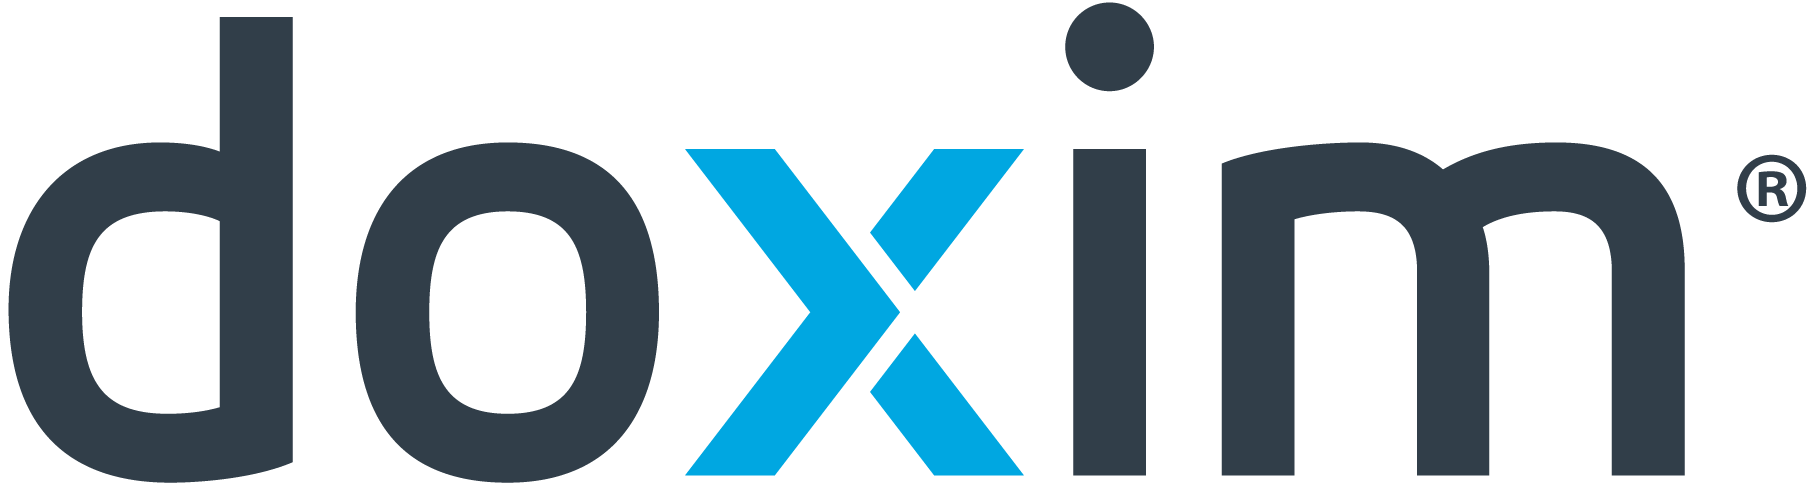 Doxim Logo No Tagline Color